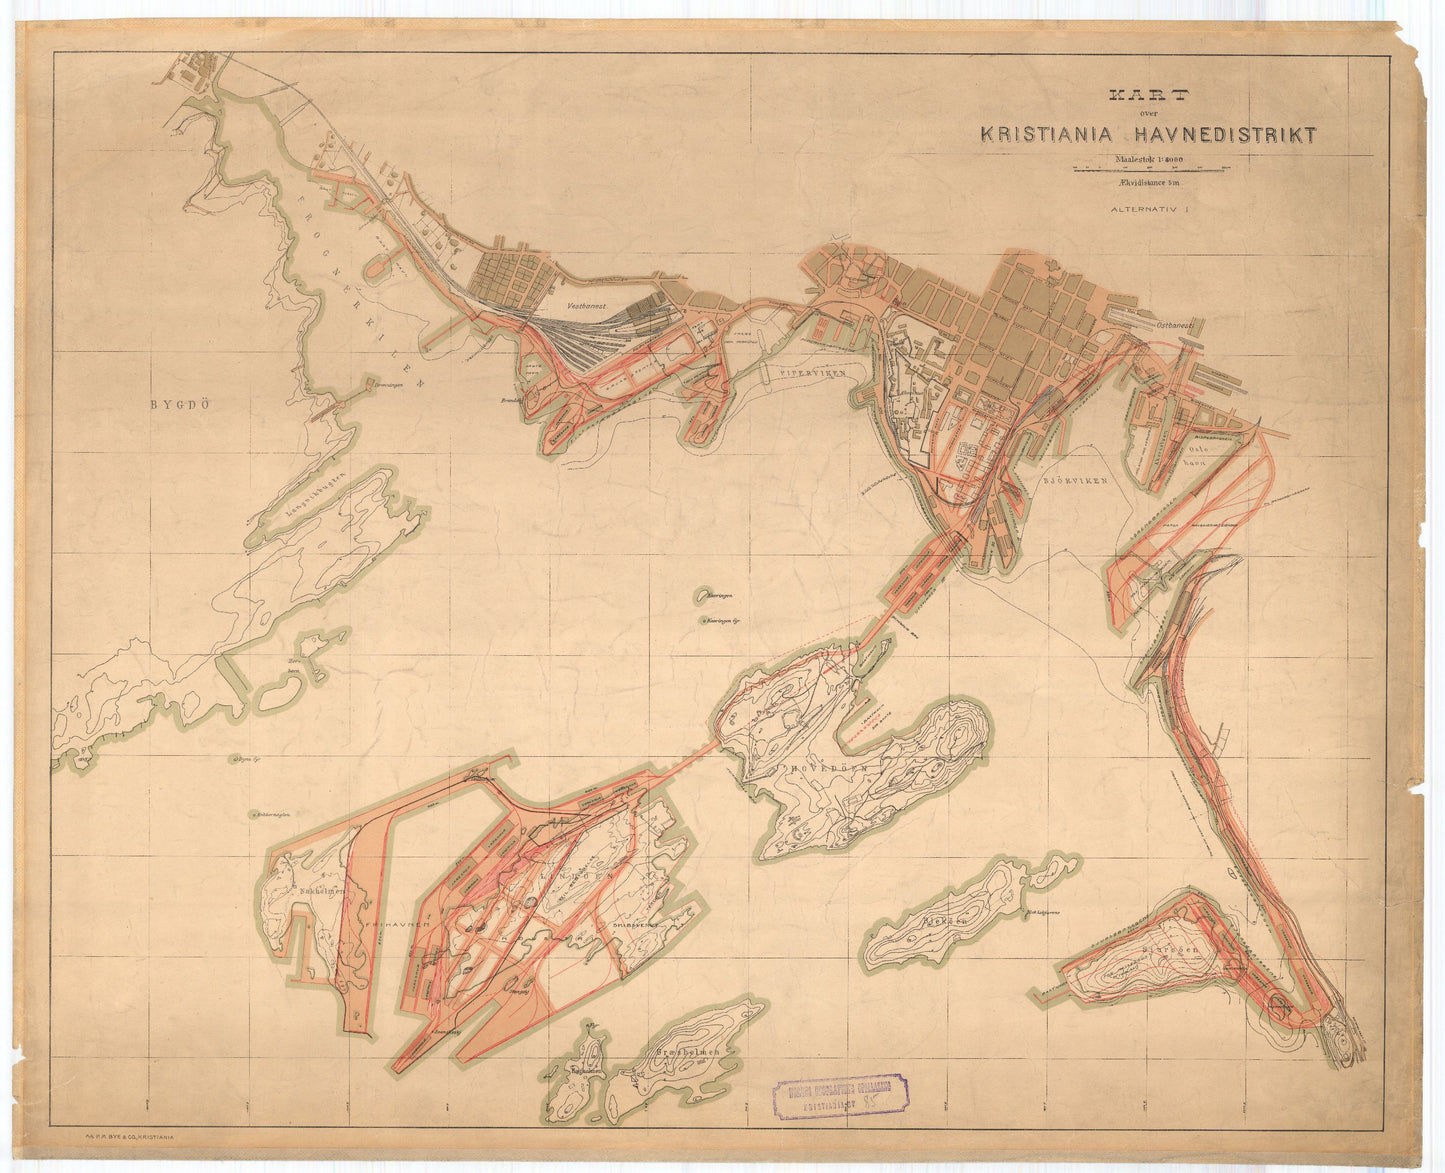 Kristiania 85-1: Kart over Kristiania havnedistrikt: Oslo